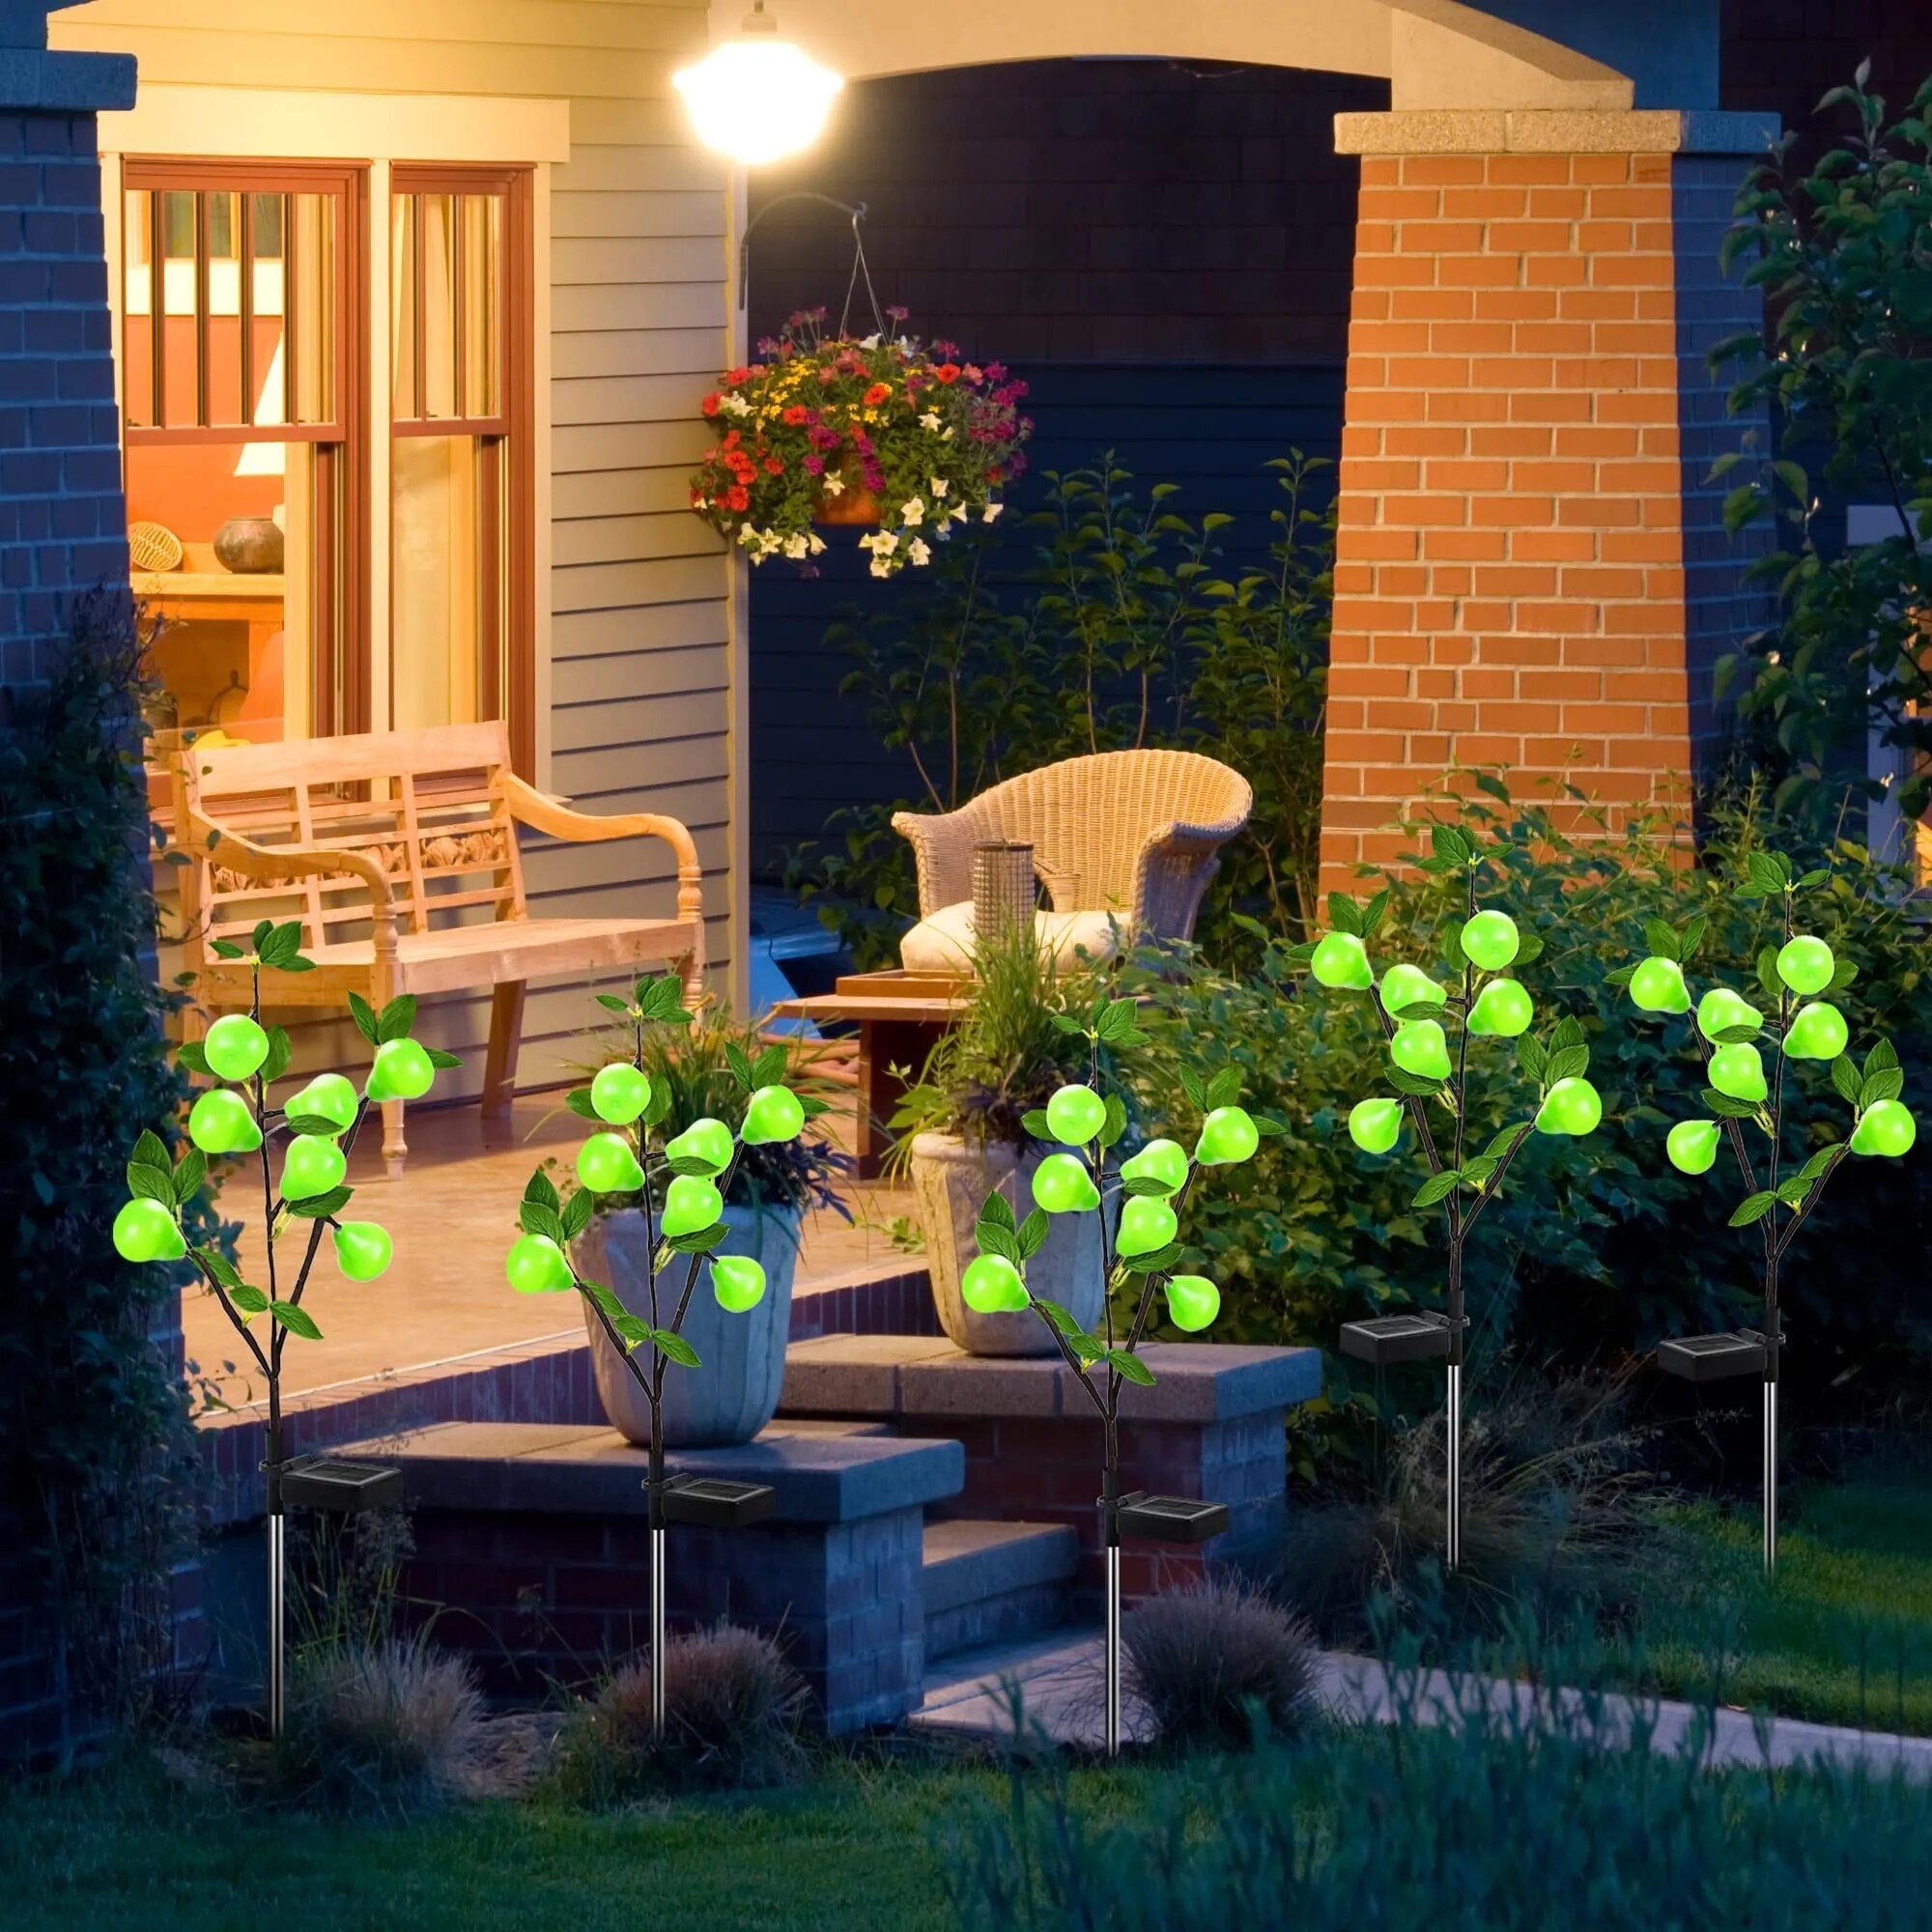 Solar Garden Lamps Simulation Pear Tree Outdoor Waterproof Led Lawn Light for Garden Balcony Courtyard Landscape Decoration